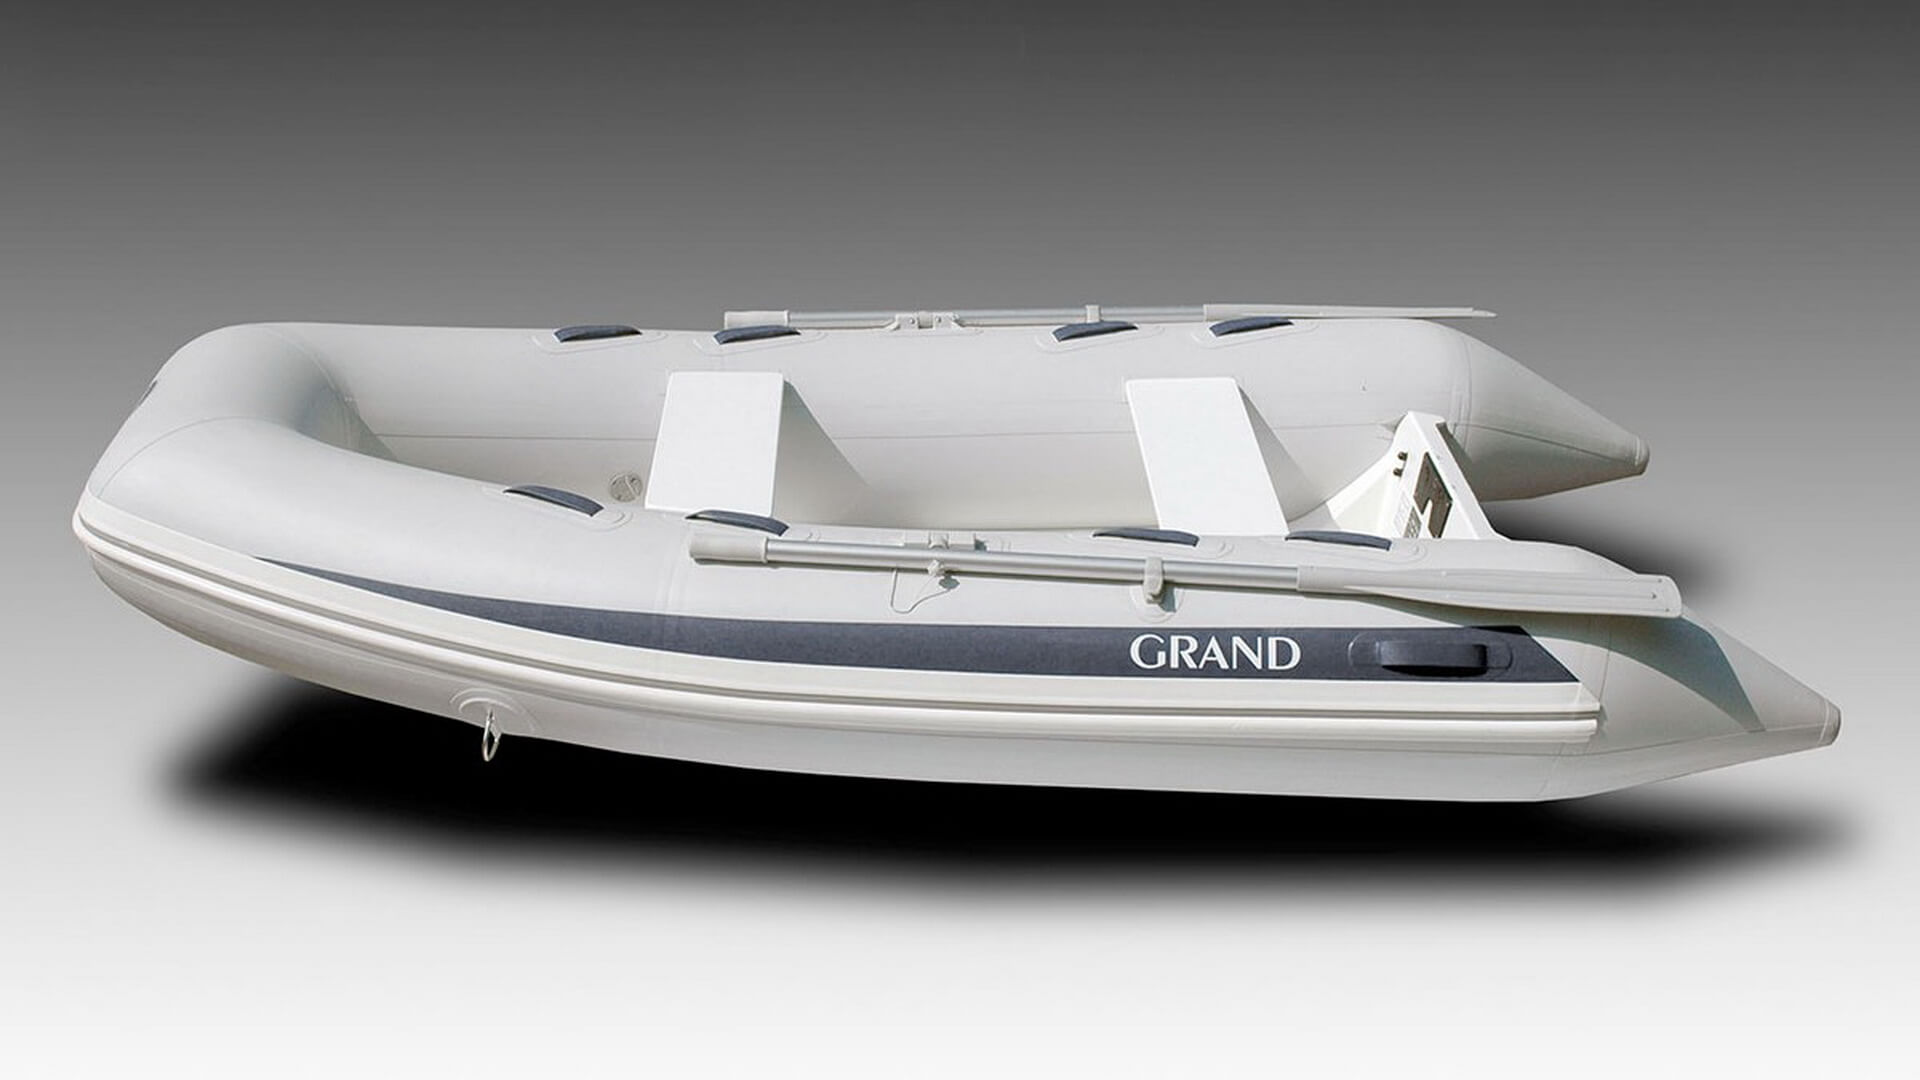 Надувная лодка с жестким дном GRAND Silver Line S275, Надувная лодка GRAND Silver Line S275, GRAND Silver Line S275, GRAND S275, GRAND Silver Line S275F, GRAND S275F, Надувная лодка GRAND, Надувная лодка ГРАНД, Надувная лодка с жестким дном, RIB, Rigid Inflatable Boats